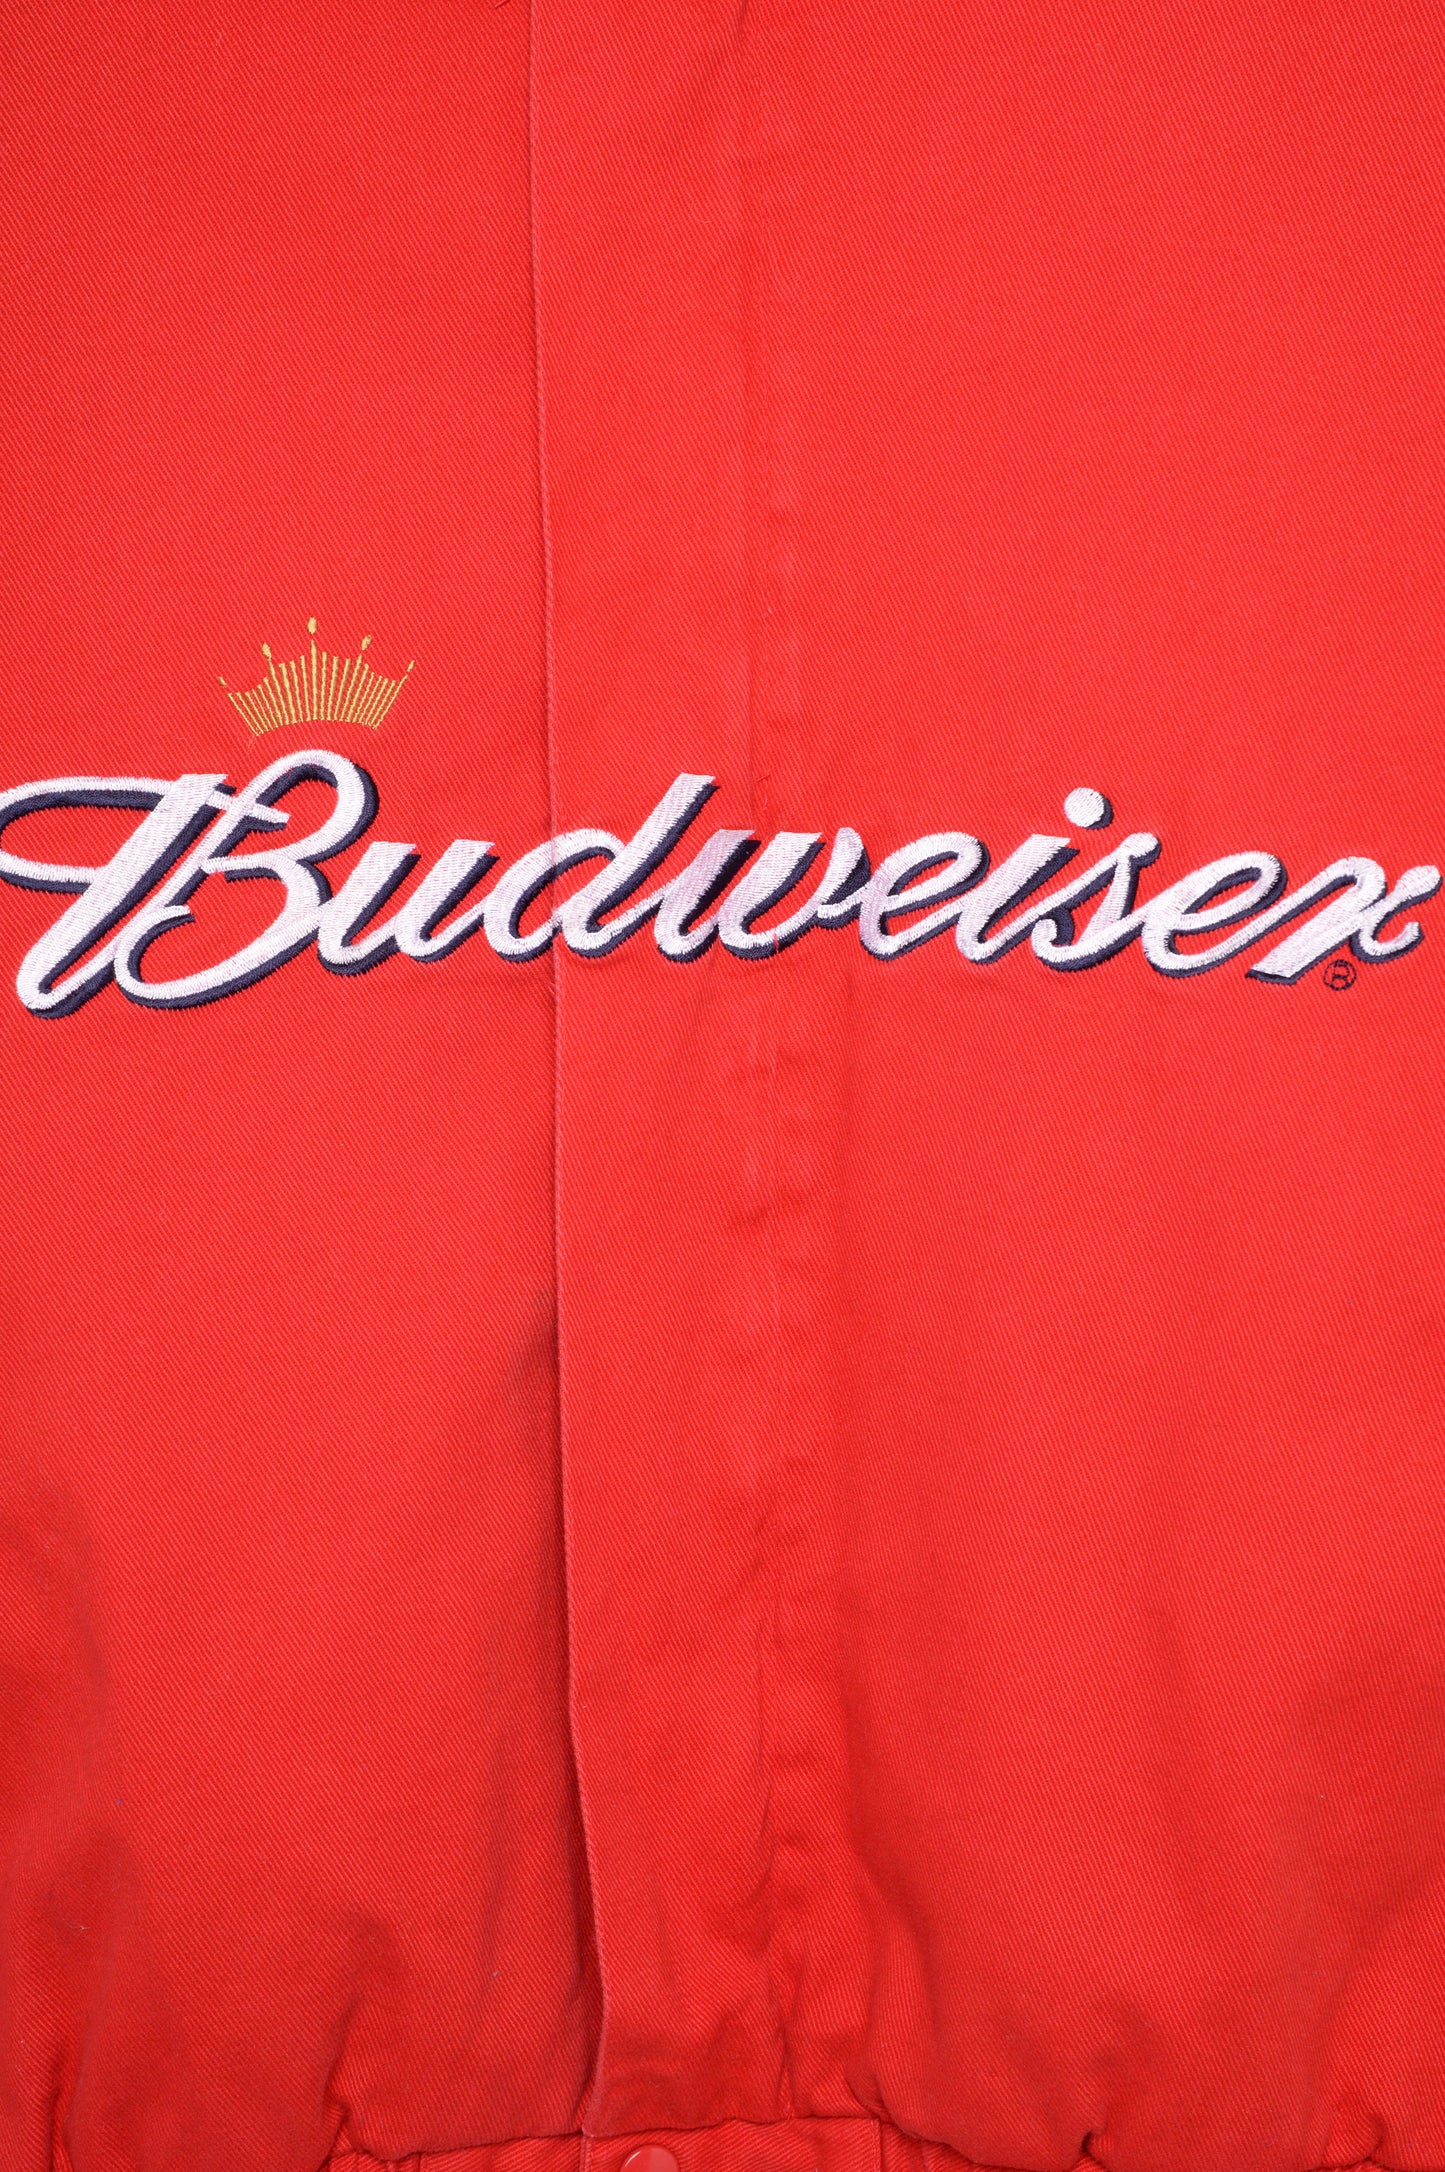 Budweiser Racing Jacket